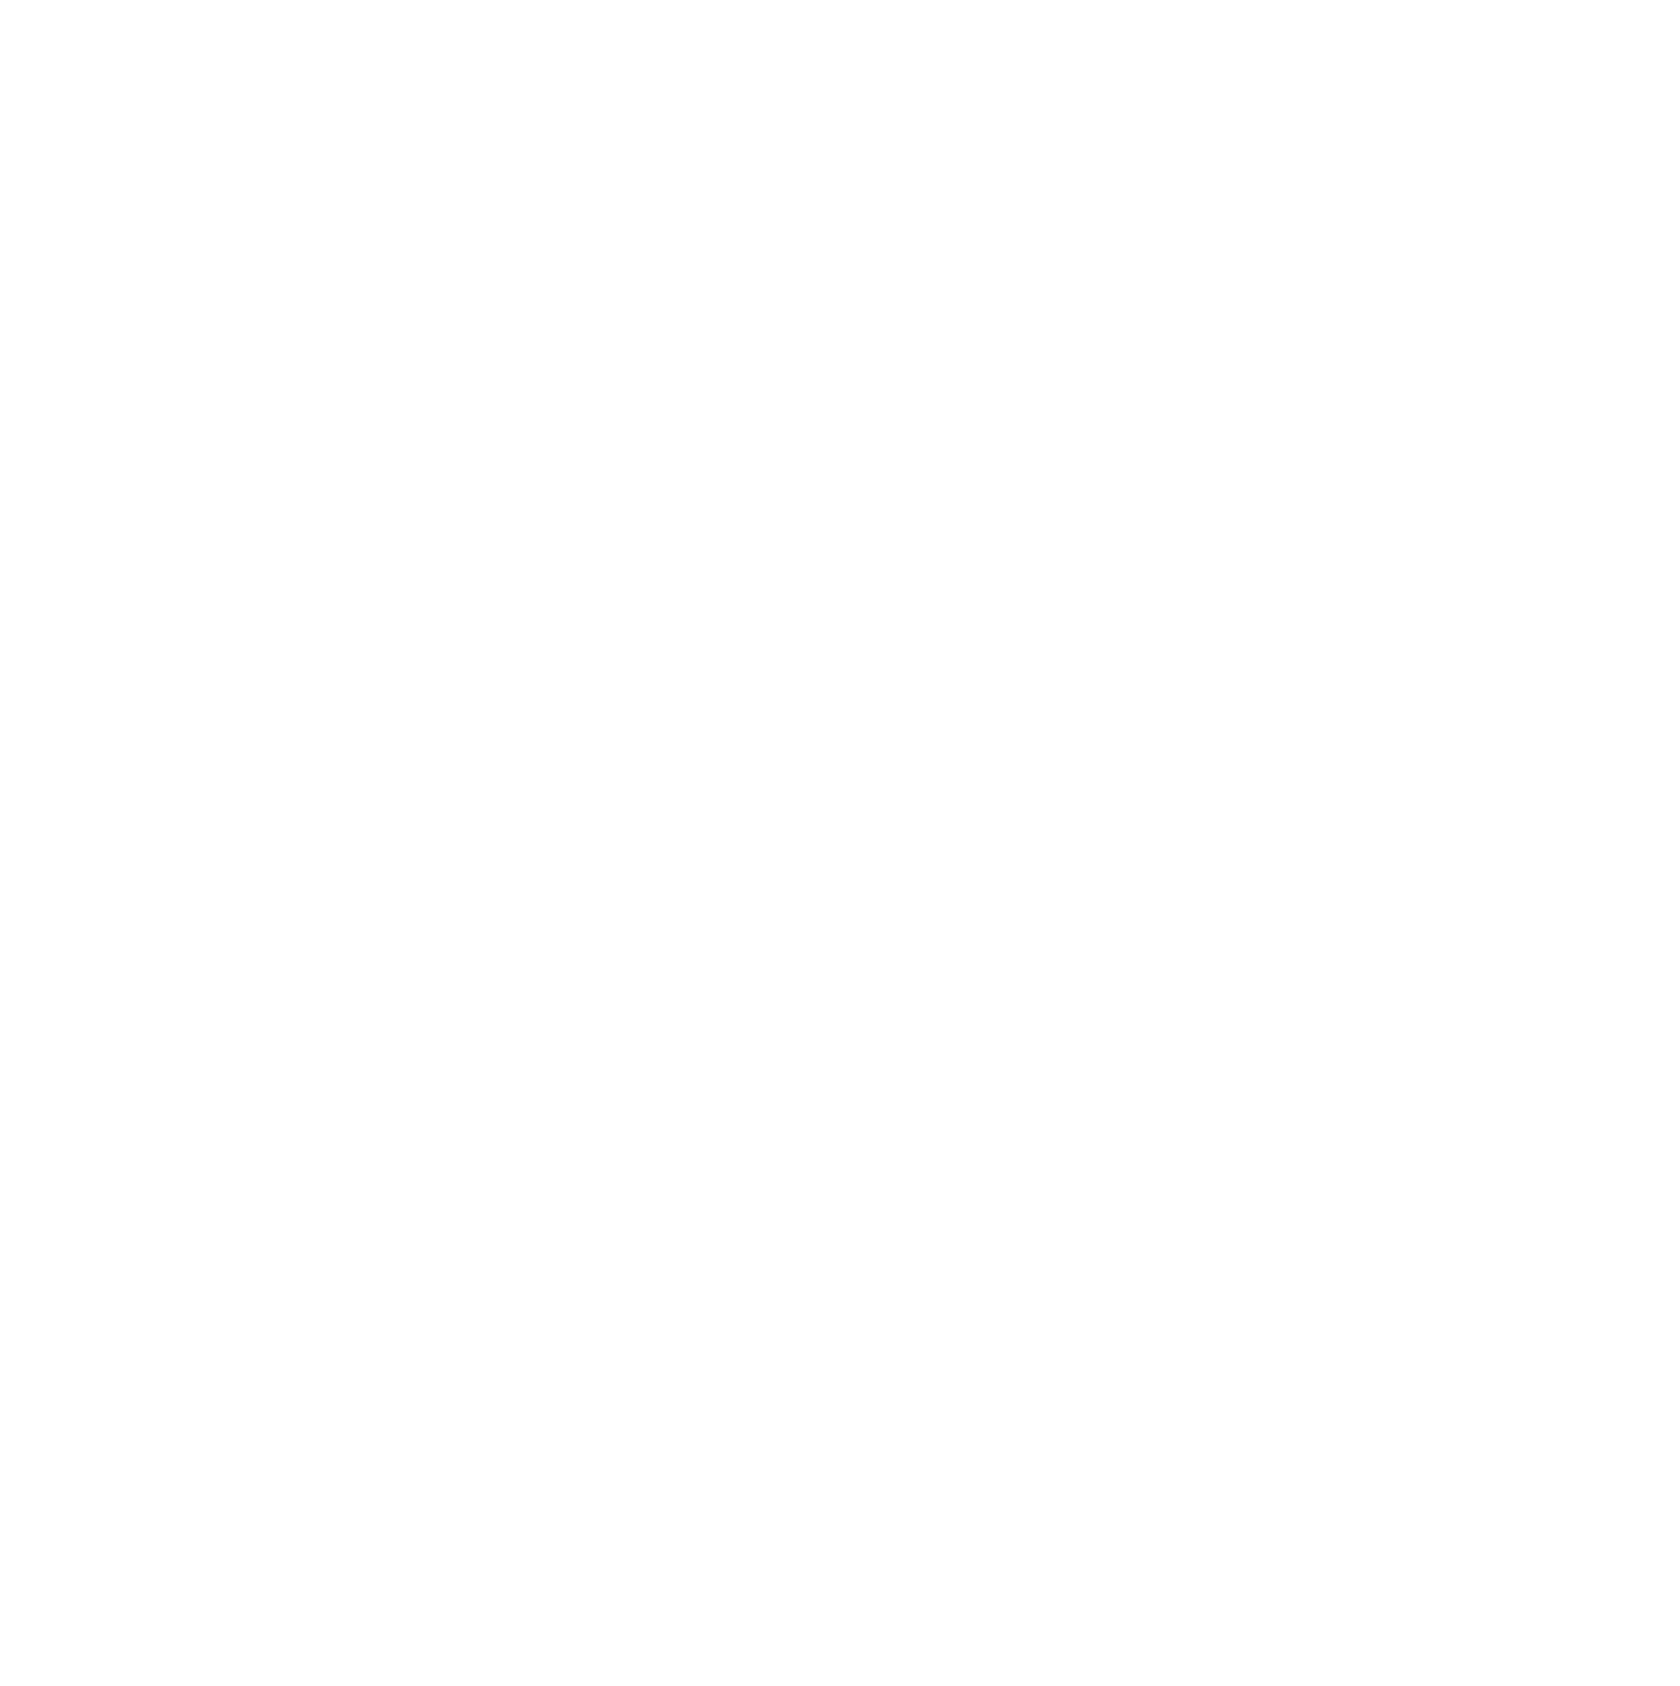 Лот №3: Картина «Майский вечер». Холст, масло, 70х70 см, 2020 г. (автор: Комаров Н.). Начальная цена: 60 000 руб.